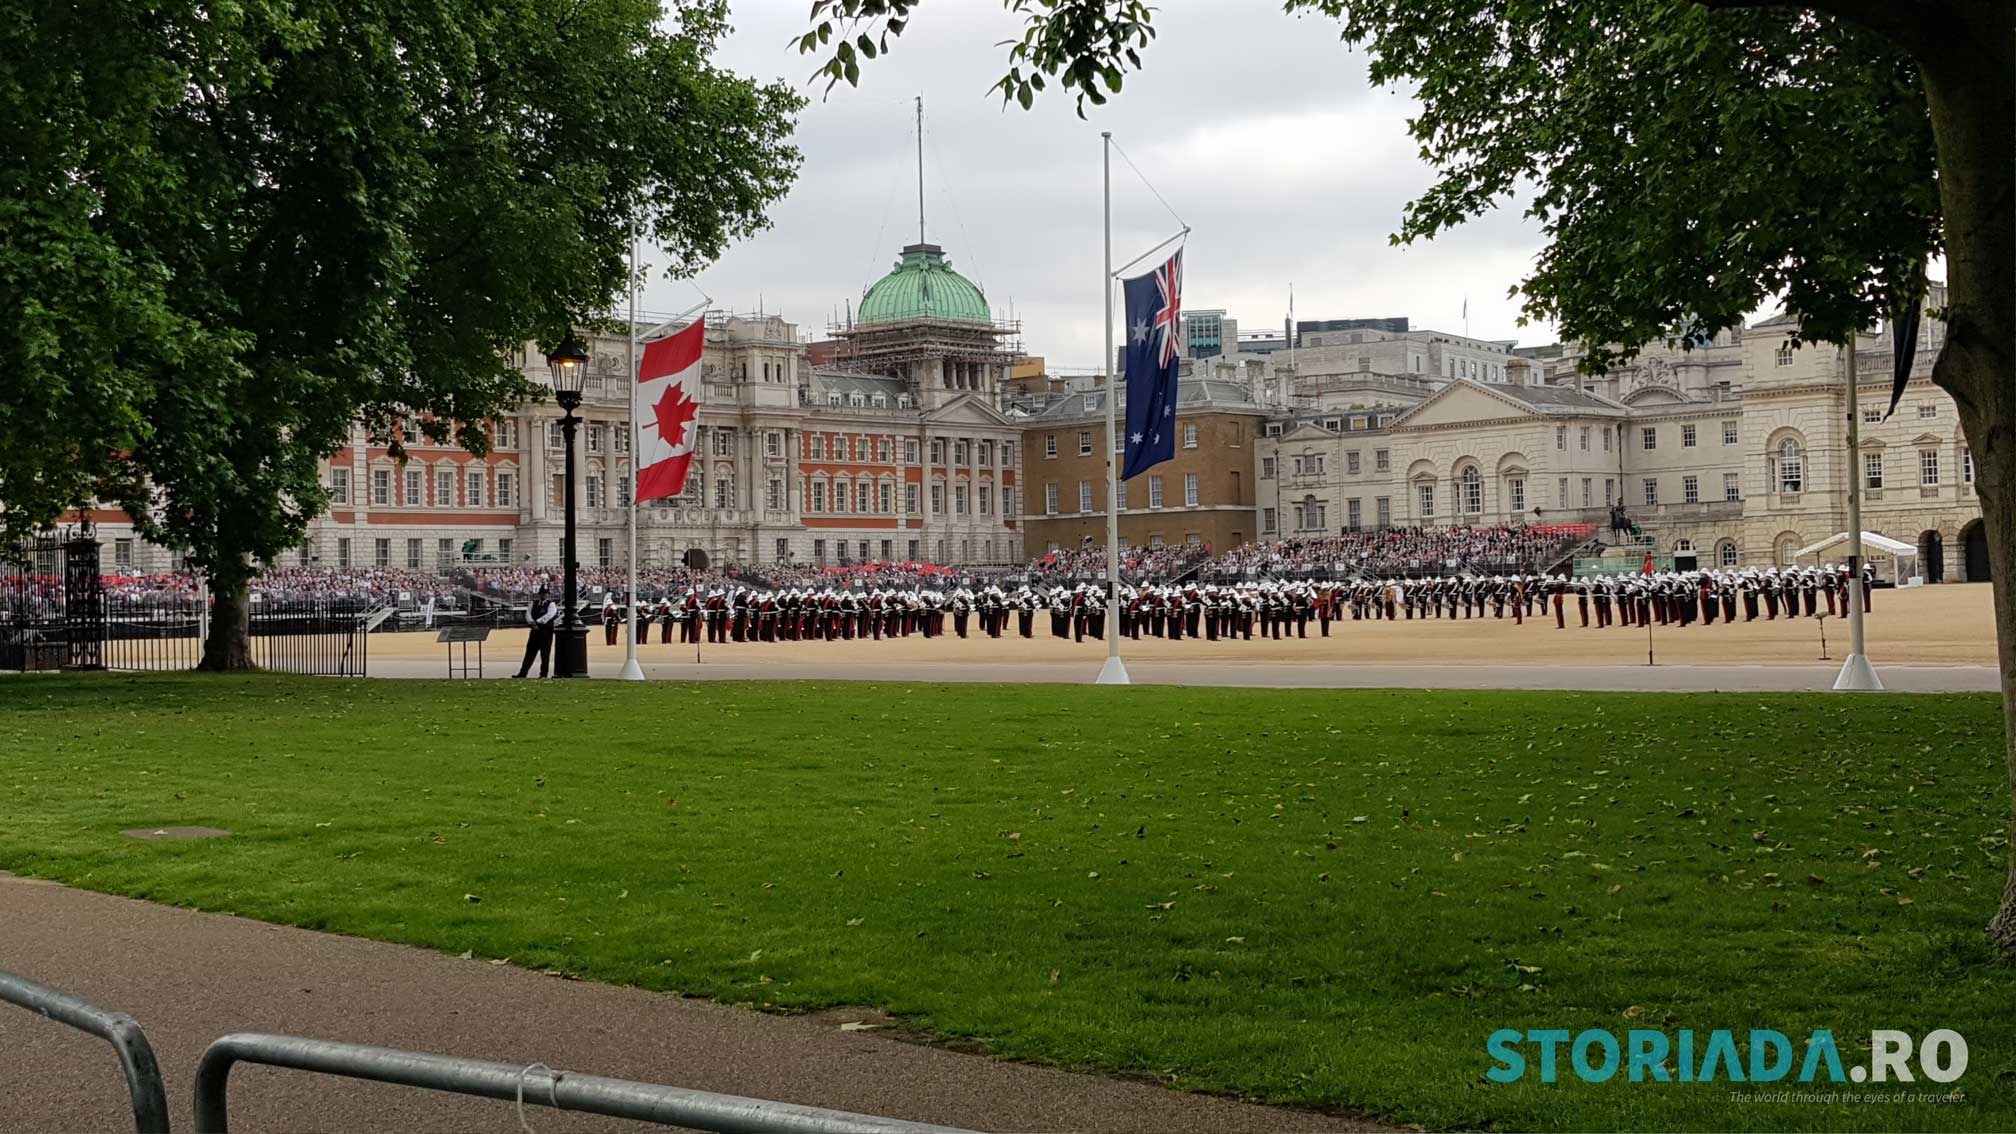 The British Royal Army, Marine Army Parade